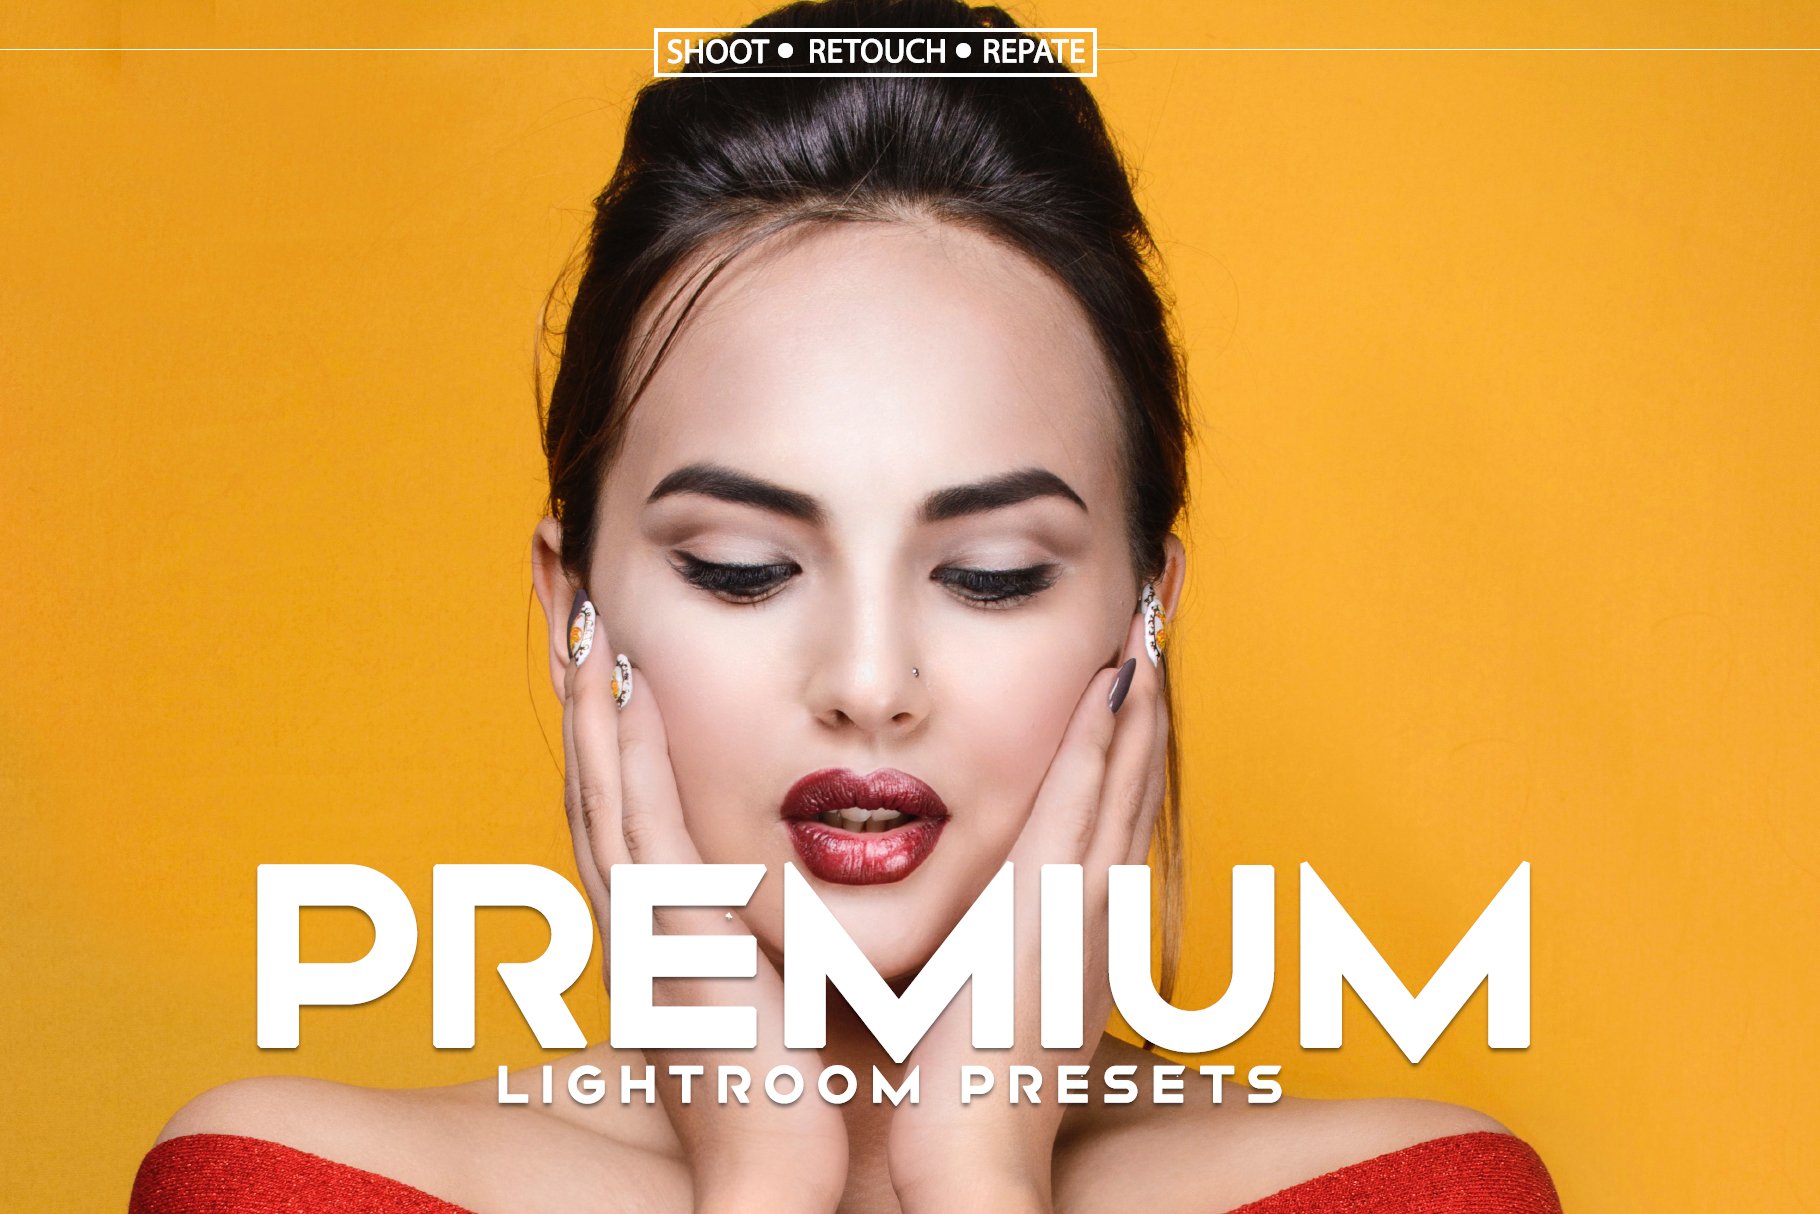 10 Premium Lightroom Presetscover image.